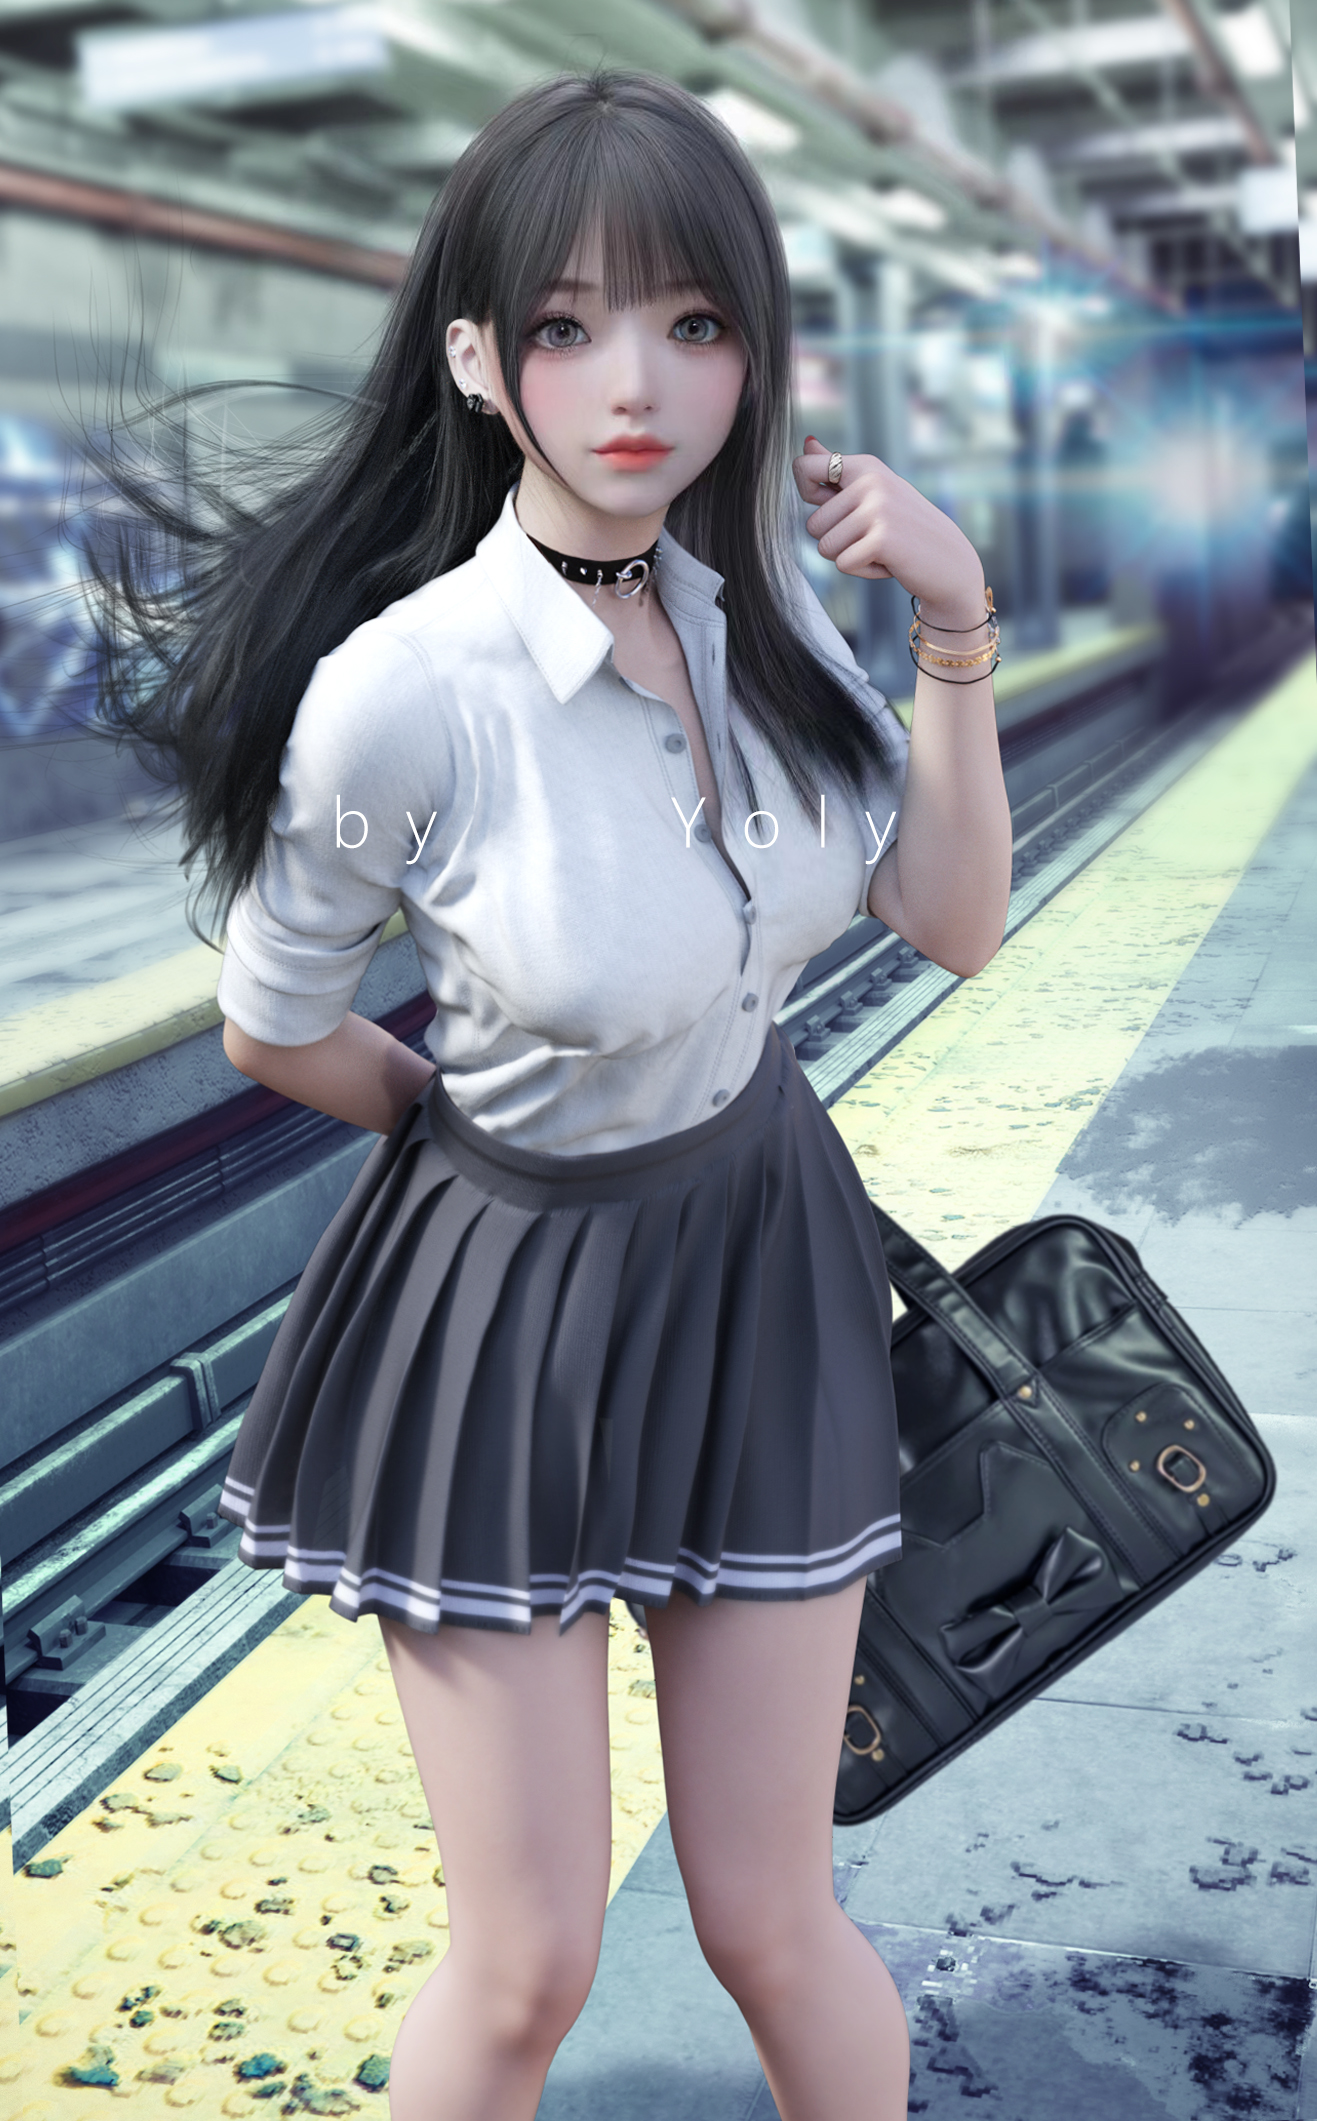 CGi Digital Art School Skirt School Uniform Schoolgirl Yoly Long Hair 1317x2121